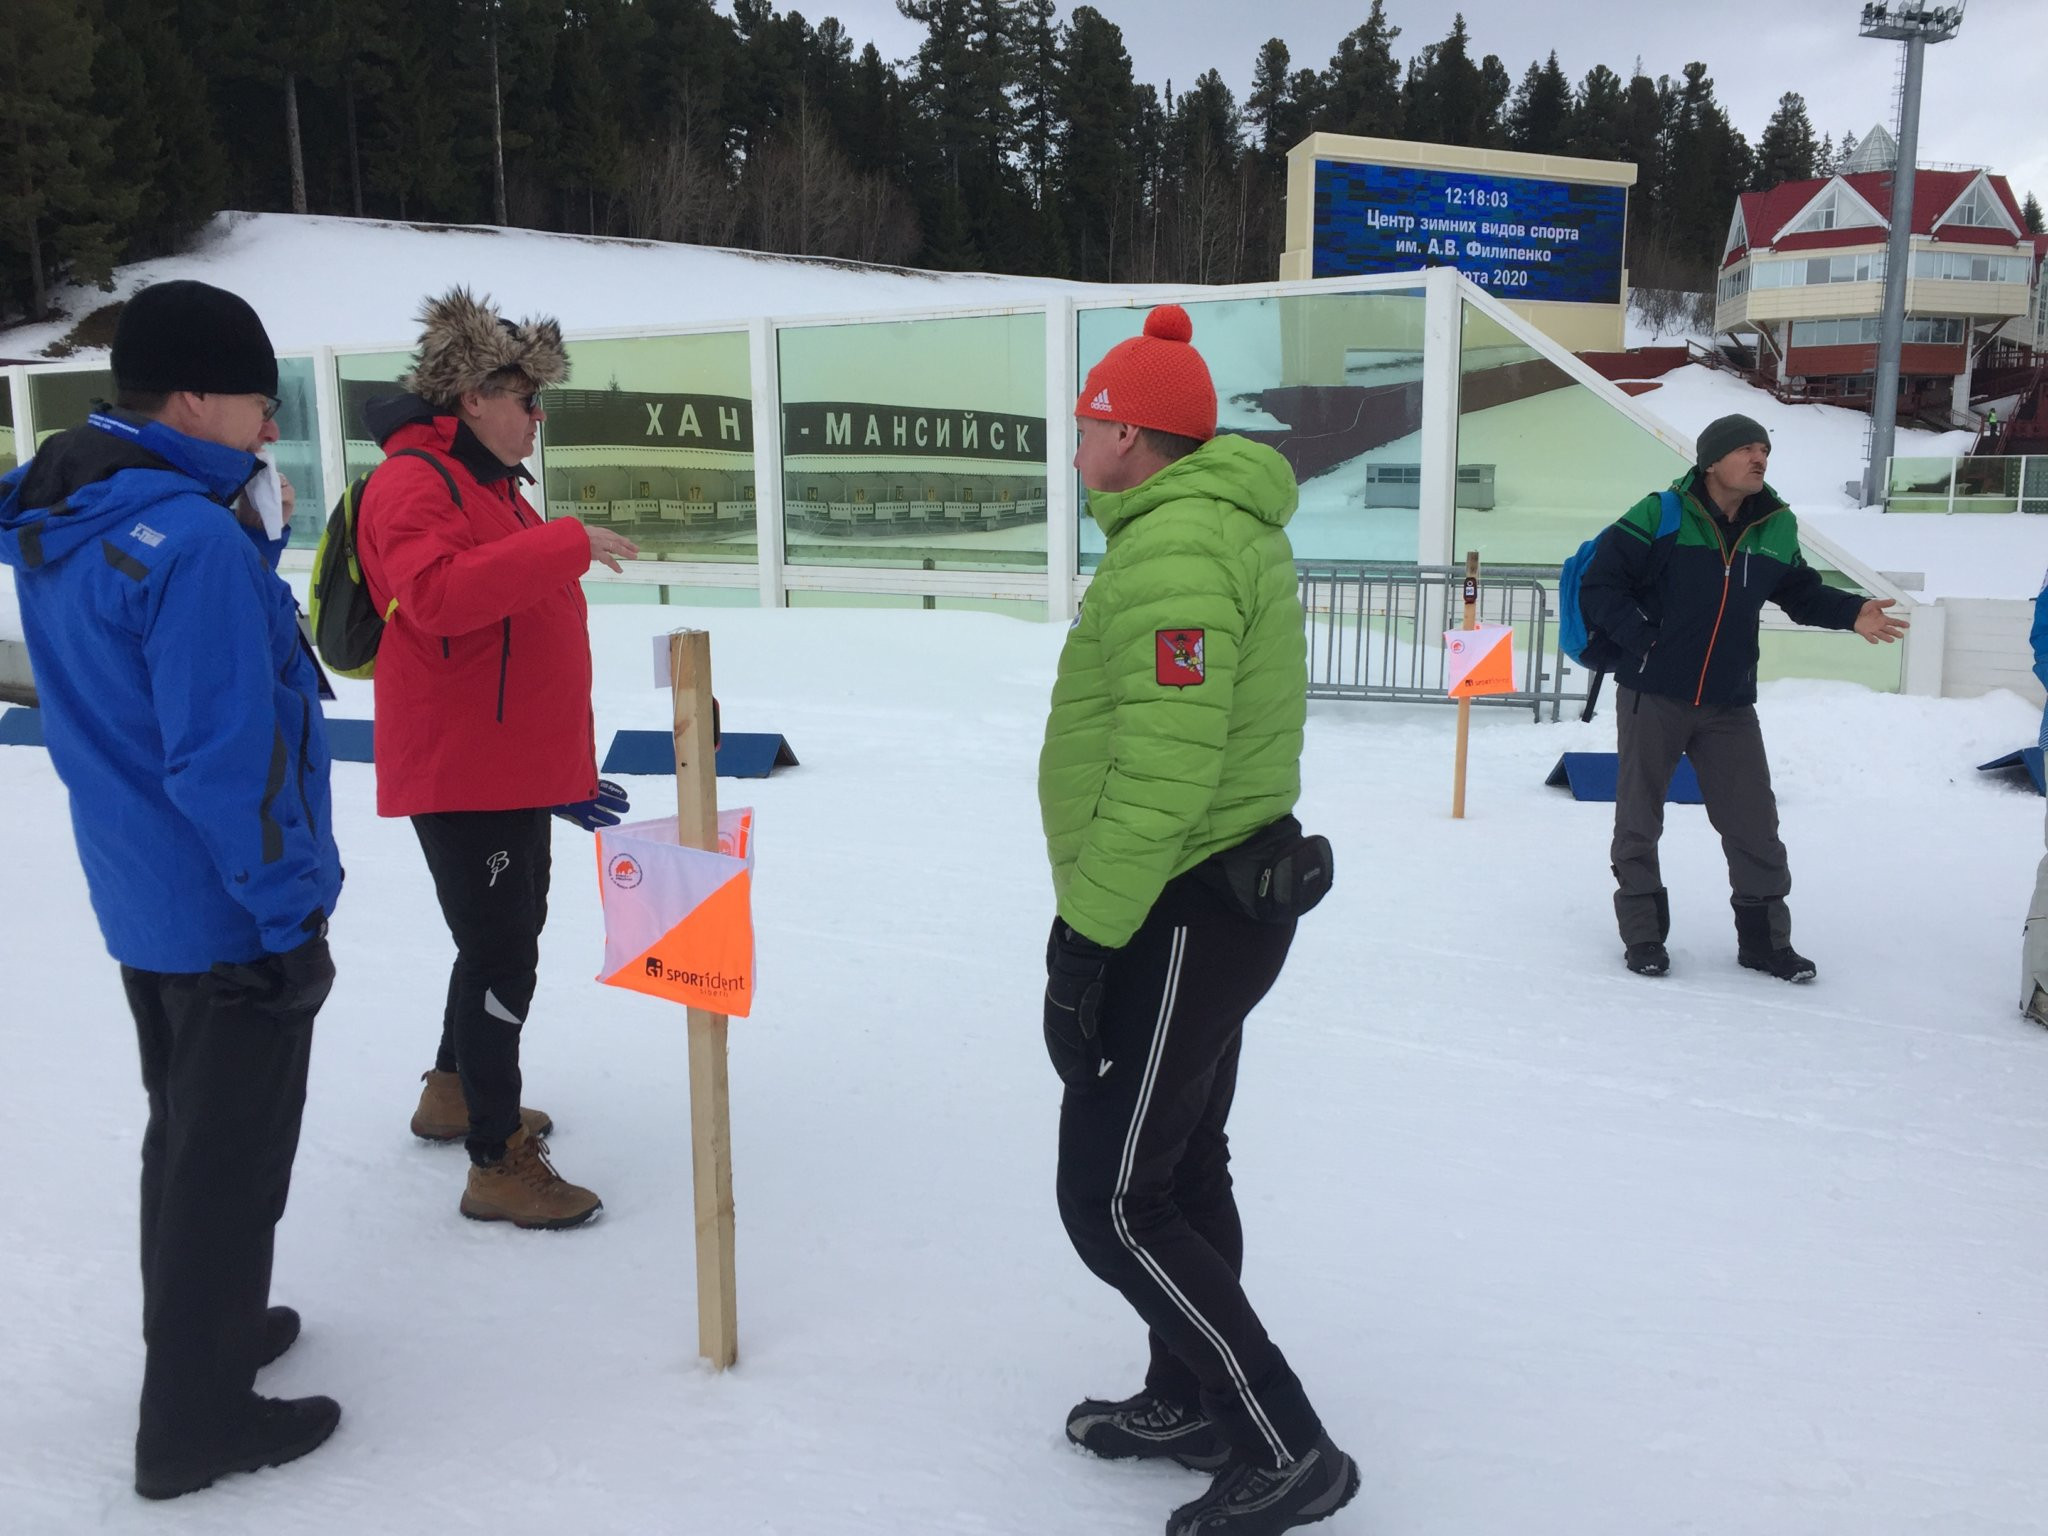 Ski orienteering clinic held in Russia